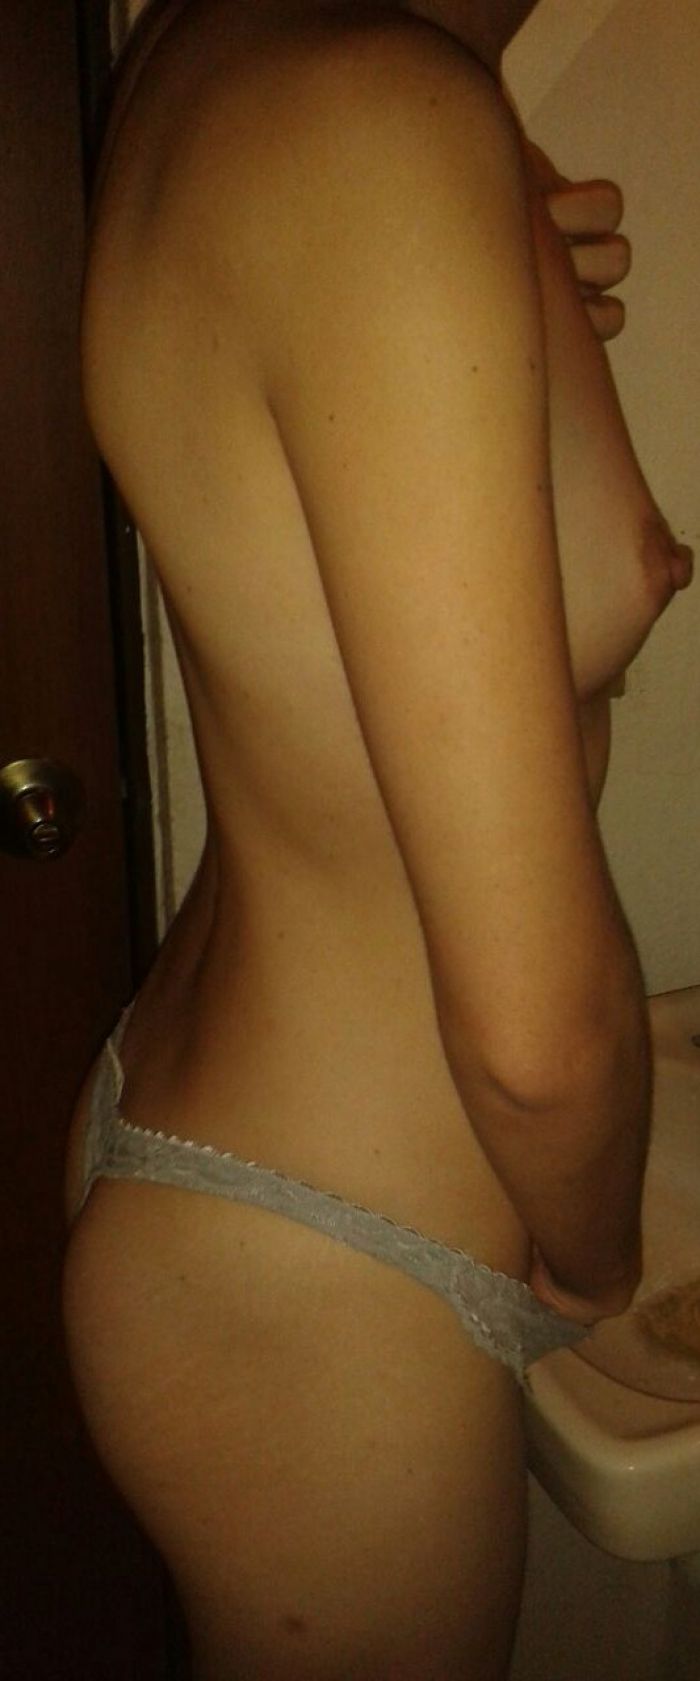 Me gusta mostrar a mi flaca desnuda - Foto 10